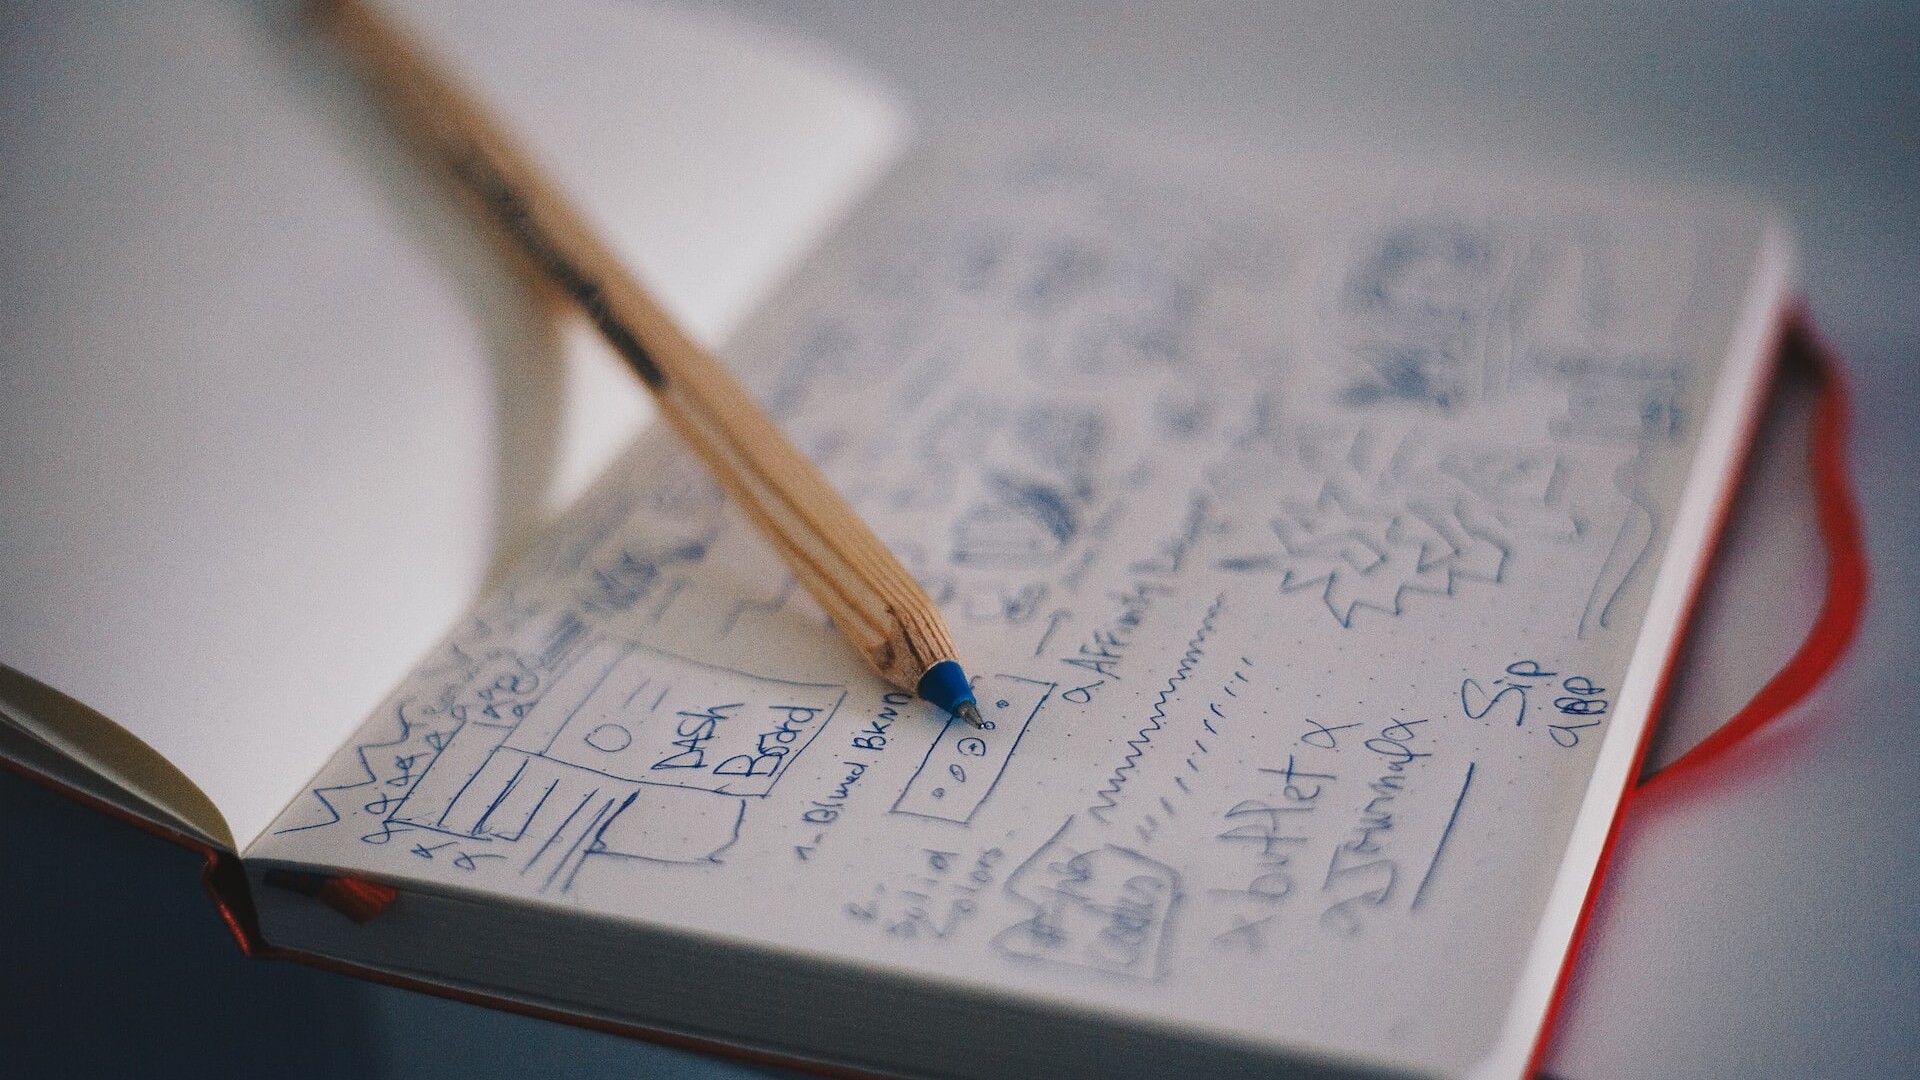 Notebook with written ideas.